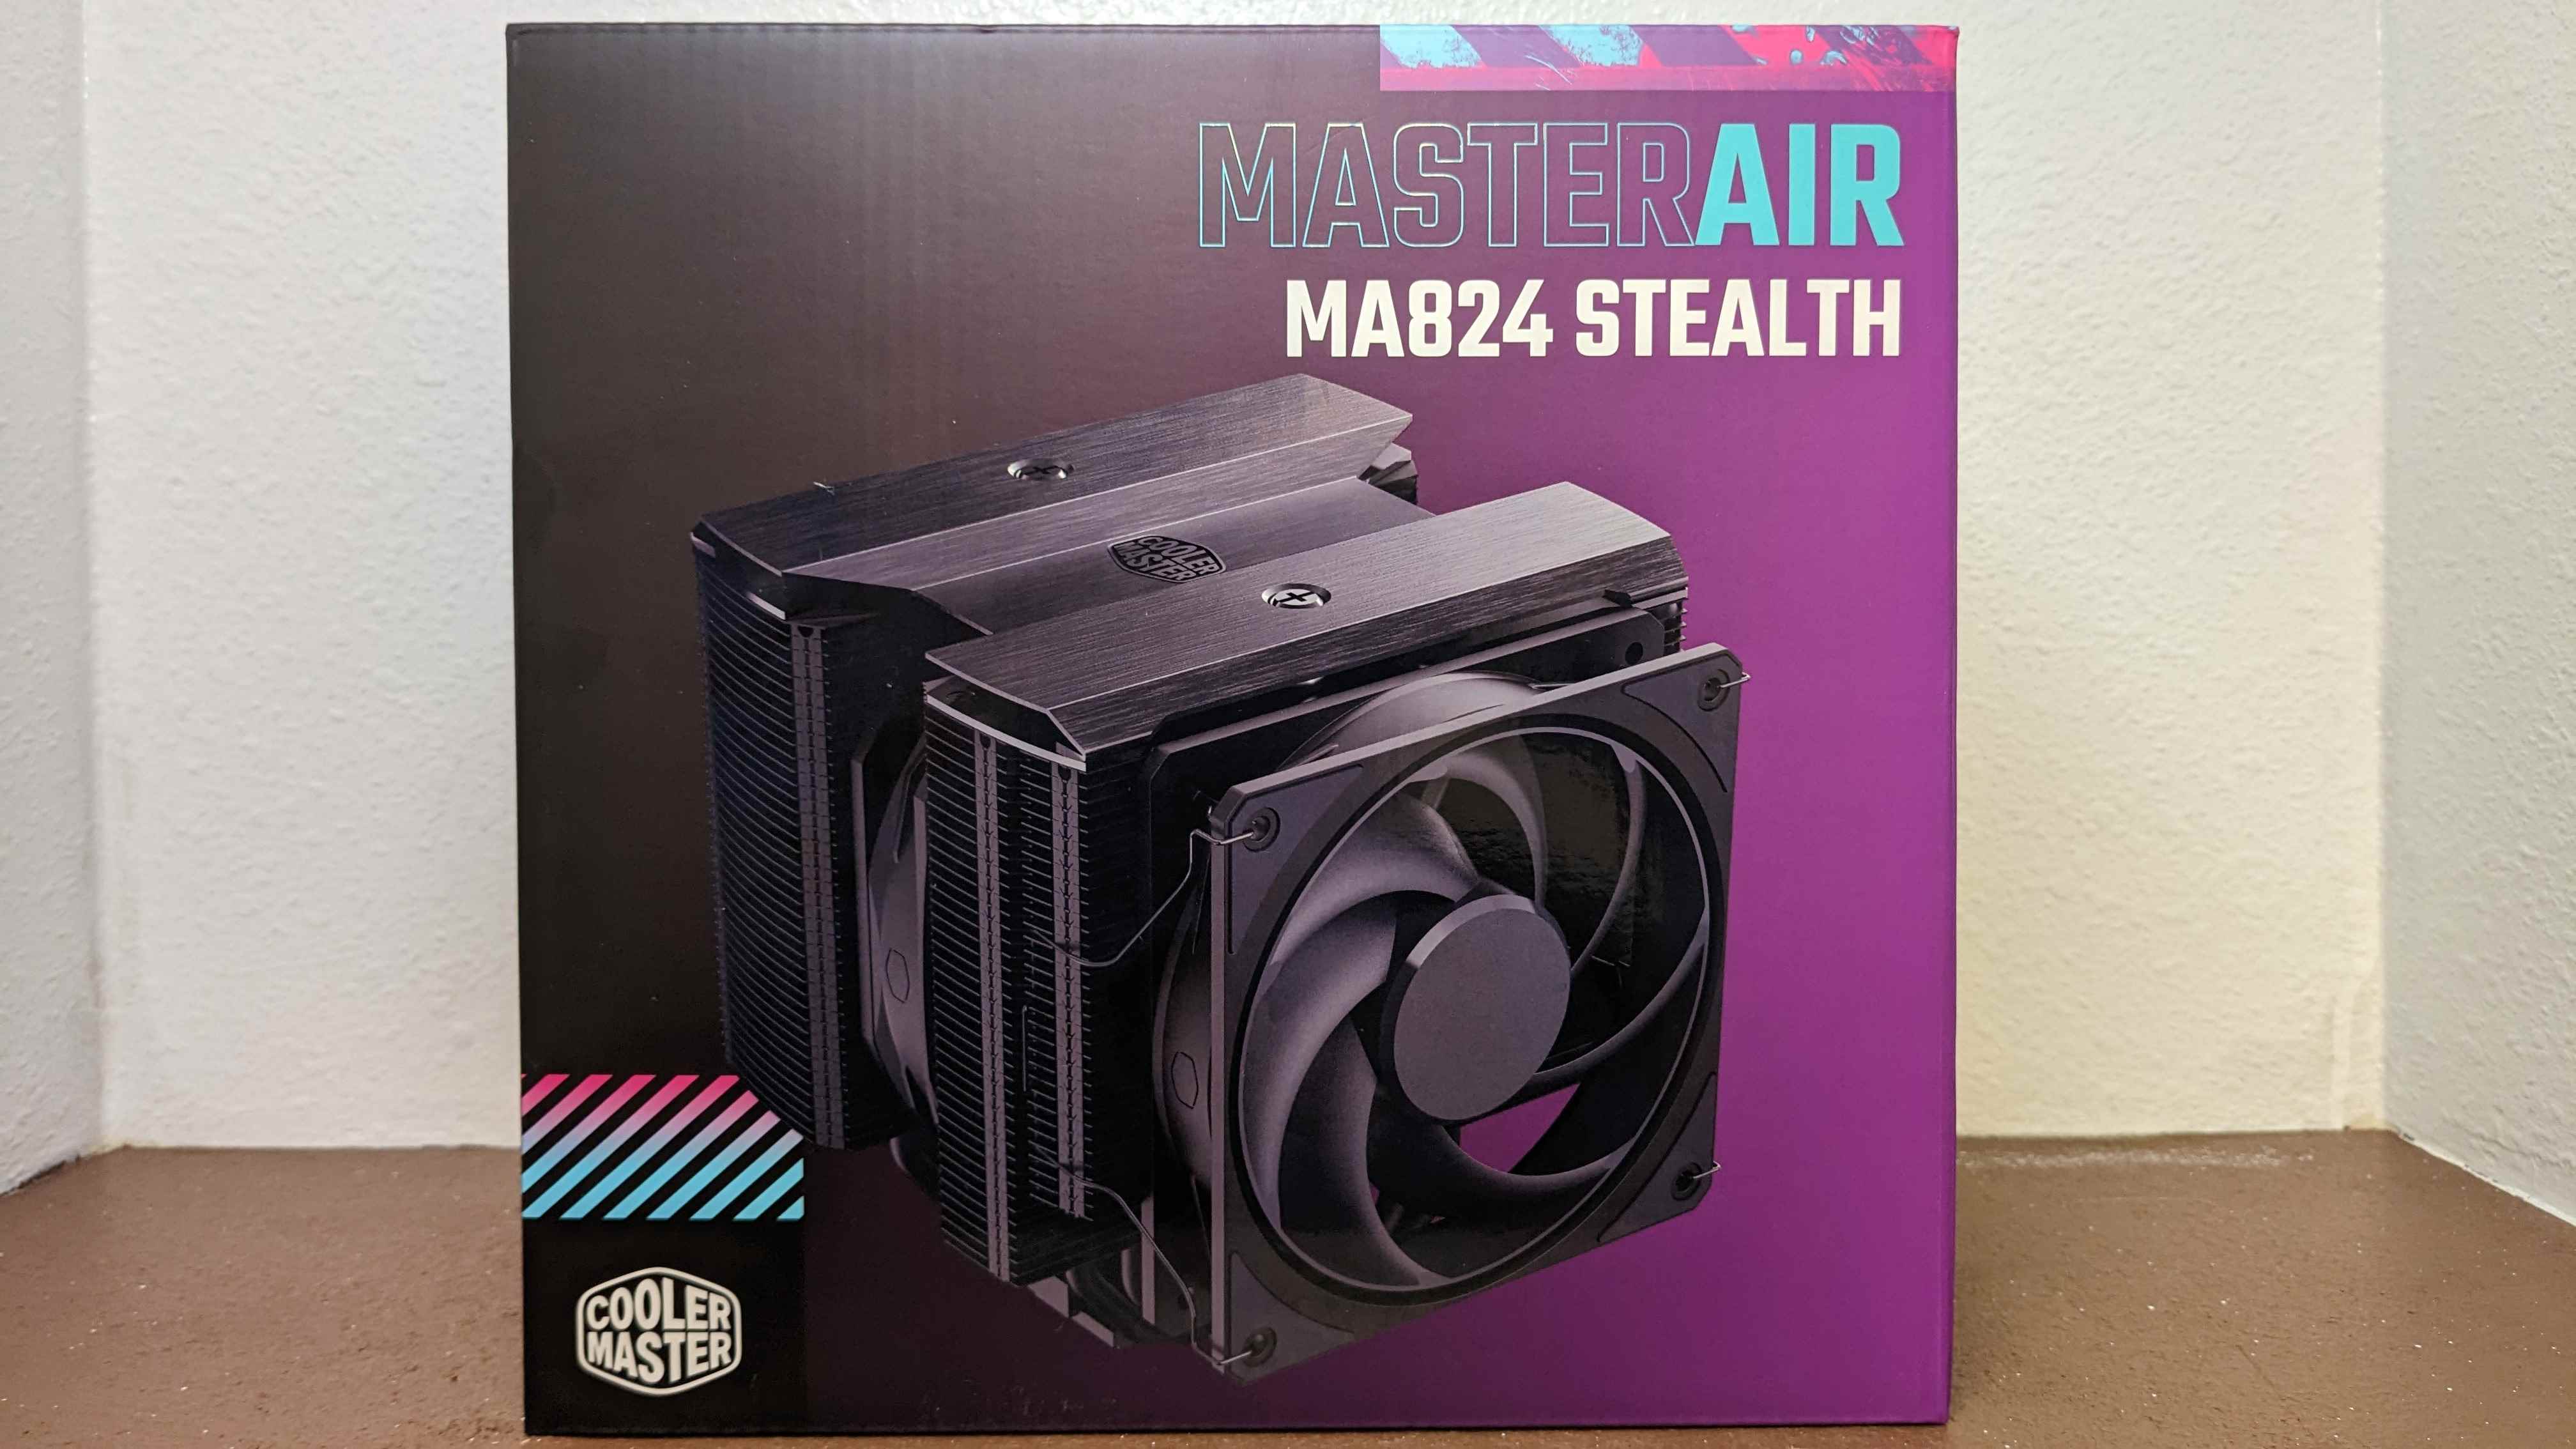 Cooler Master MA824 Gizlilik